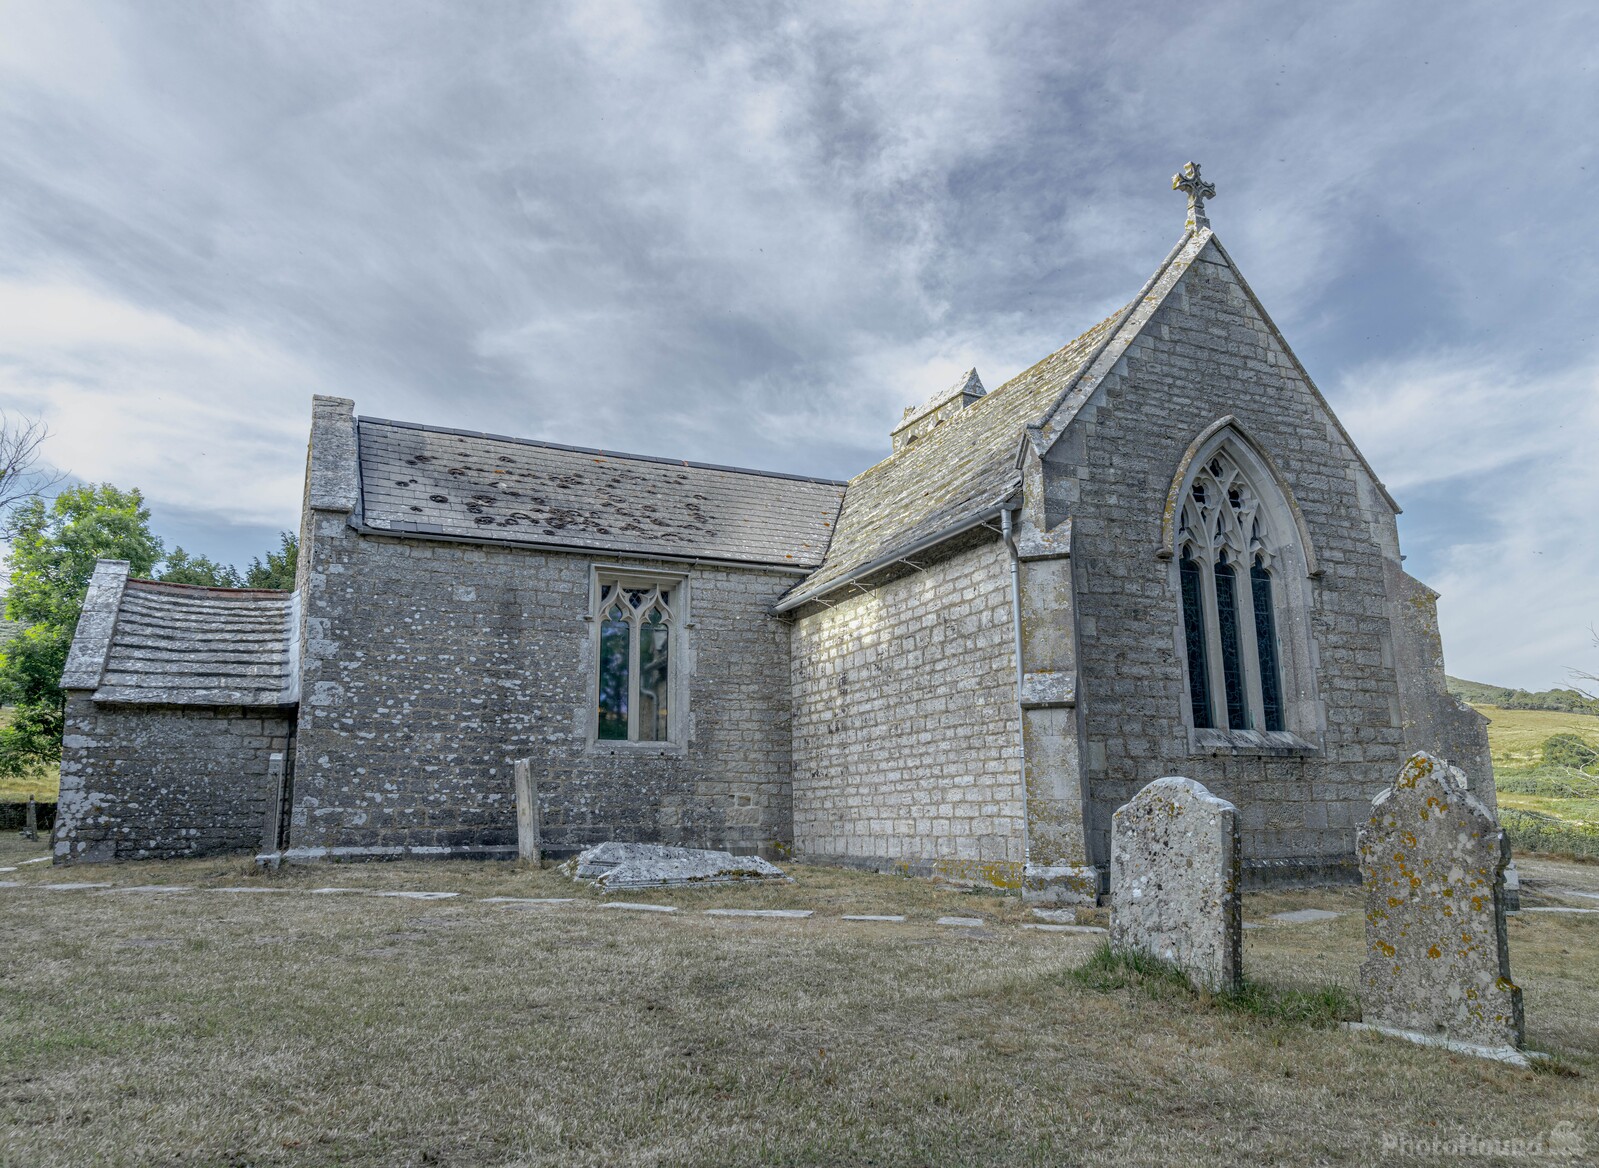 Image of St Mary’s Church, Wareham by michael bennett